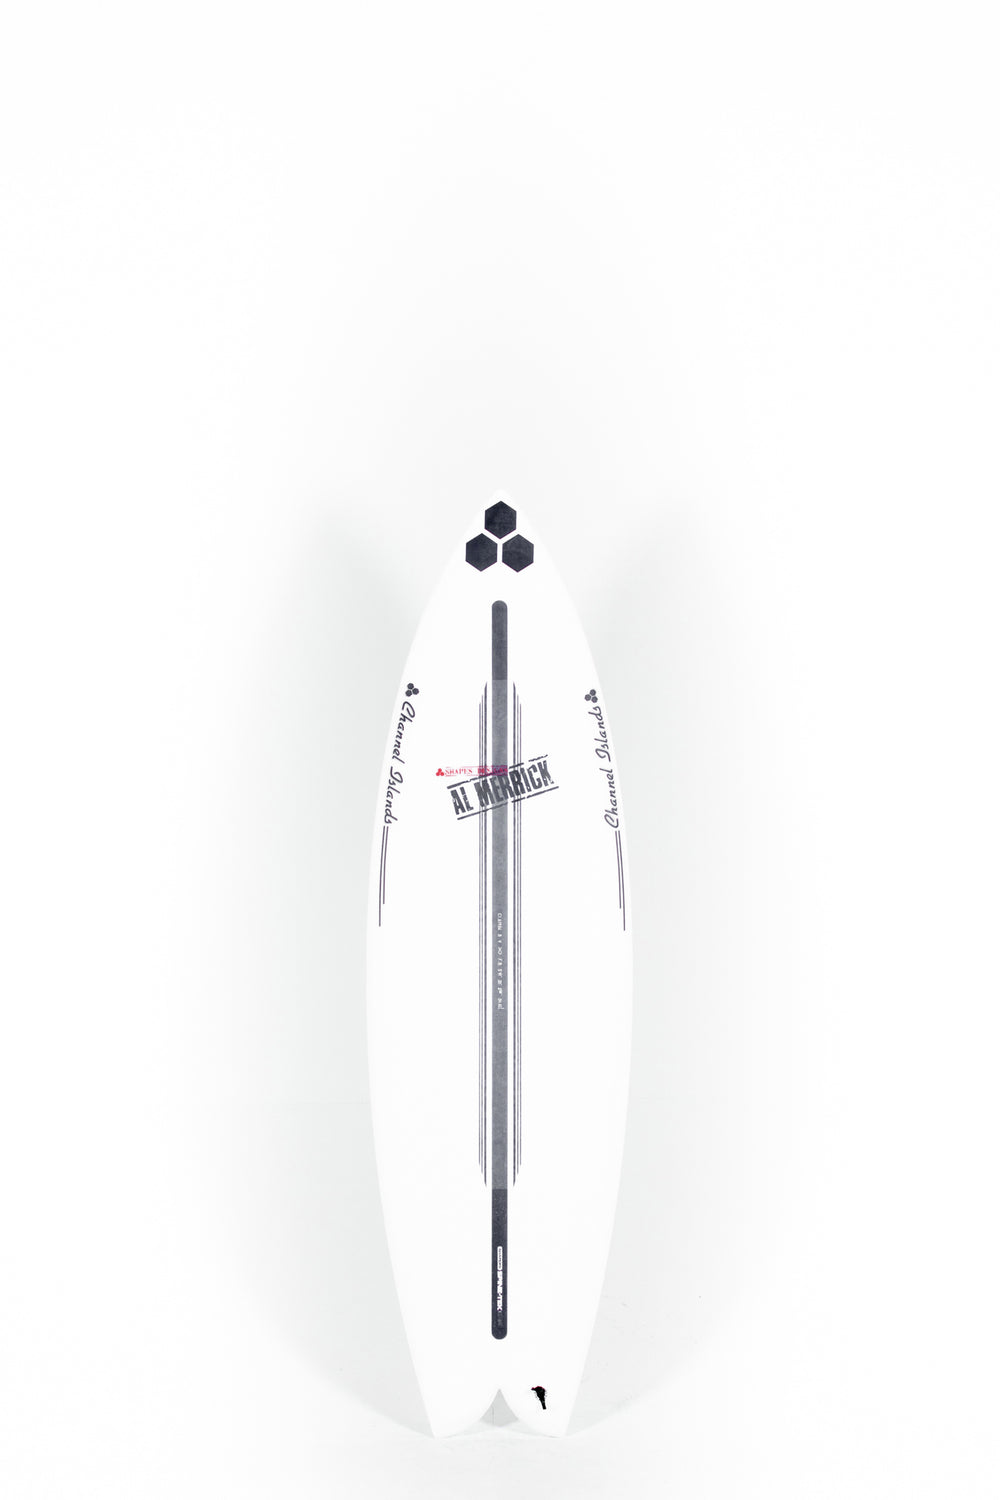 Pukas Surf Shop - Channel Islands - FISHBEARD - Spine Tek - 5'11